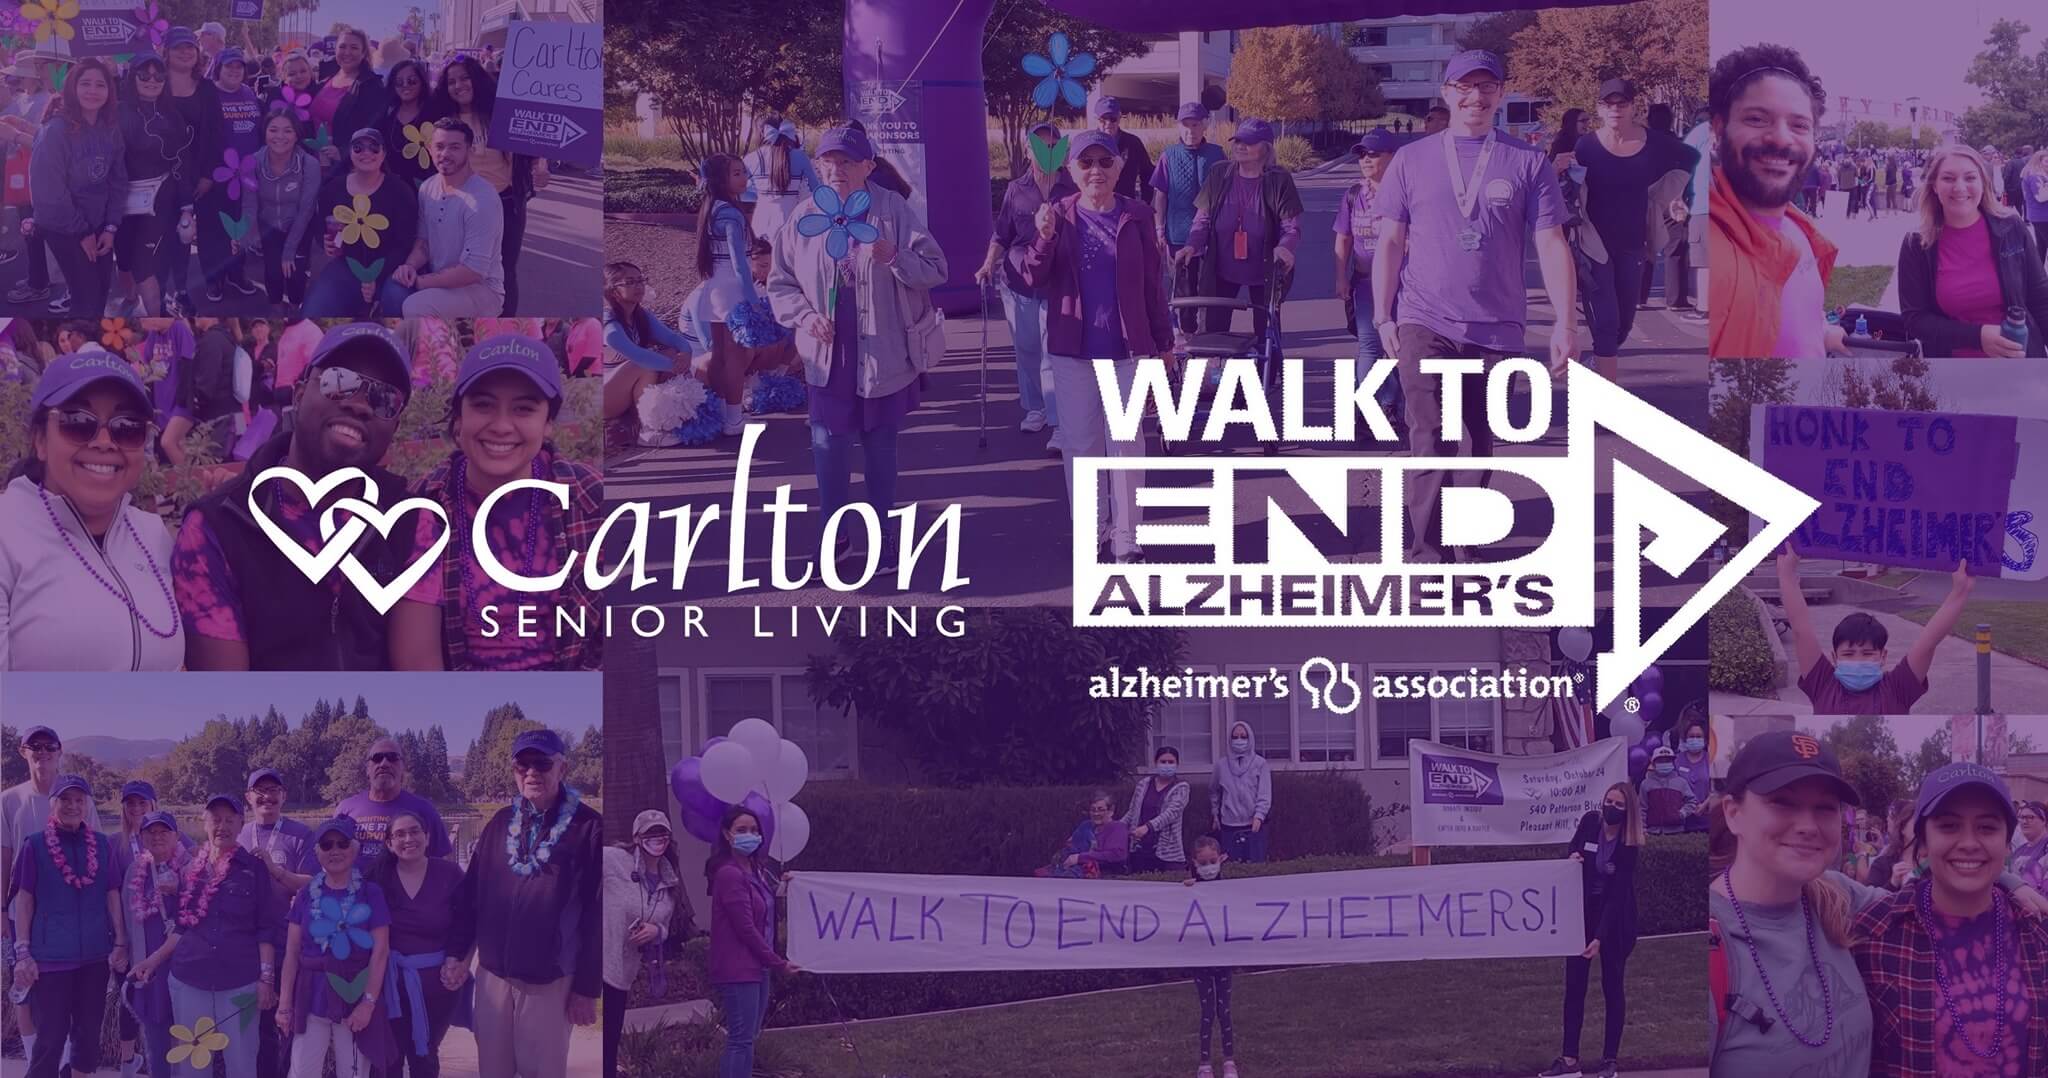 Carlton Senior Living Supports The Alzheimer's Association